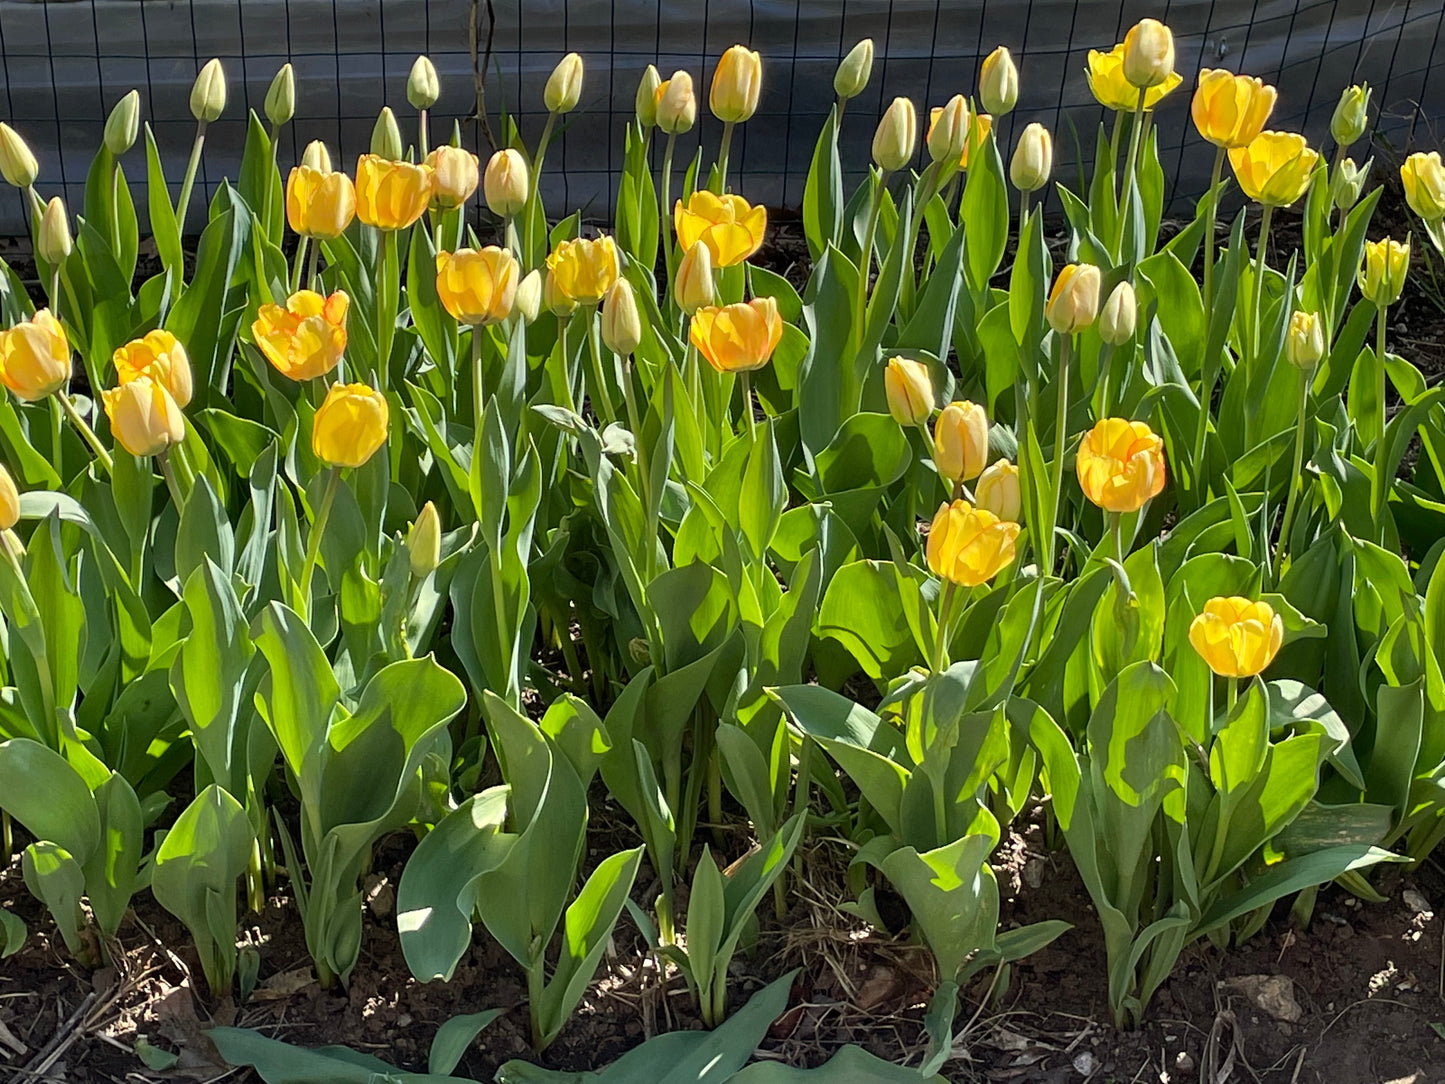 Tulips: Yellow with slight reddish/pinkish tips